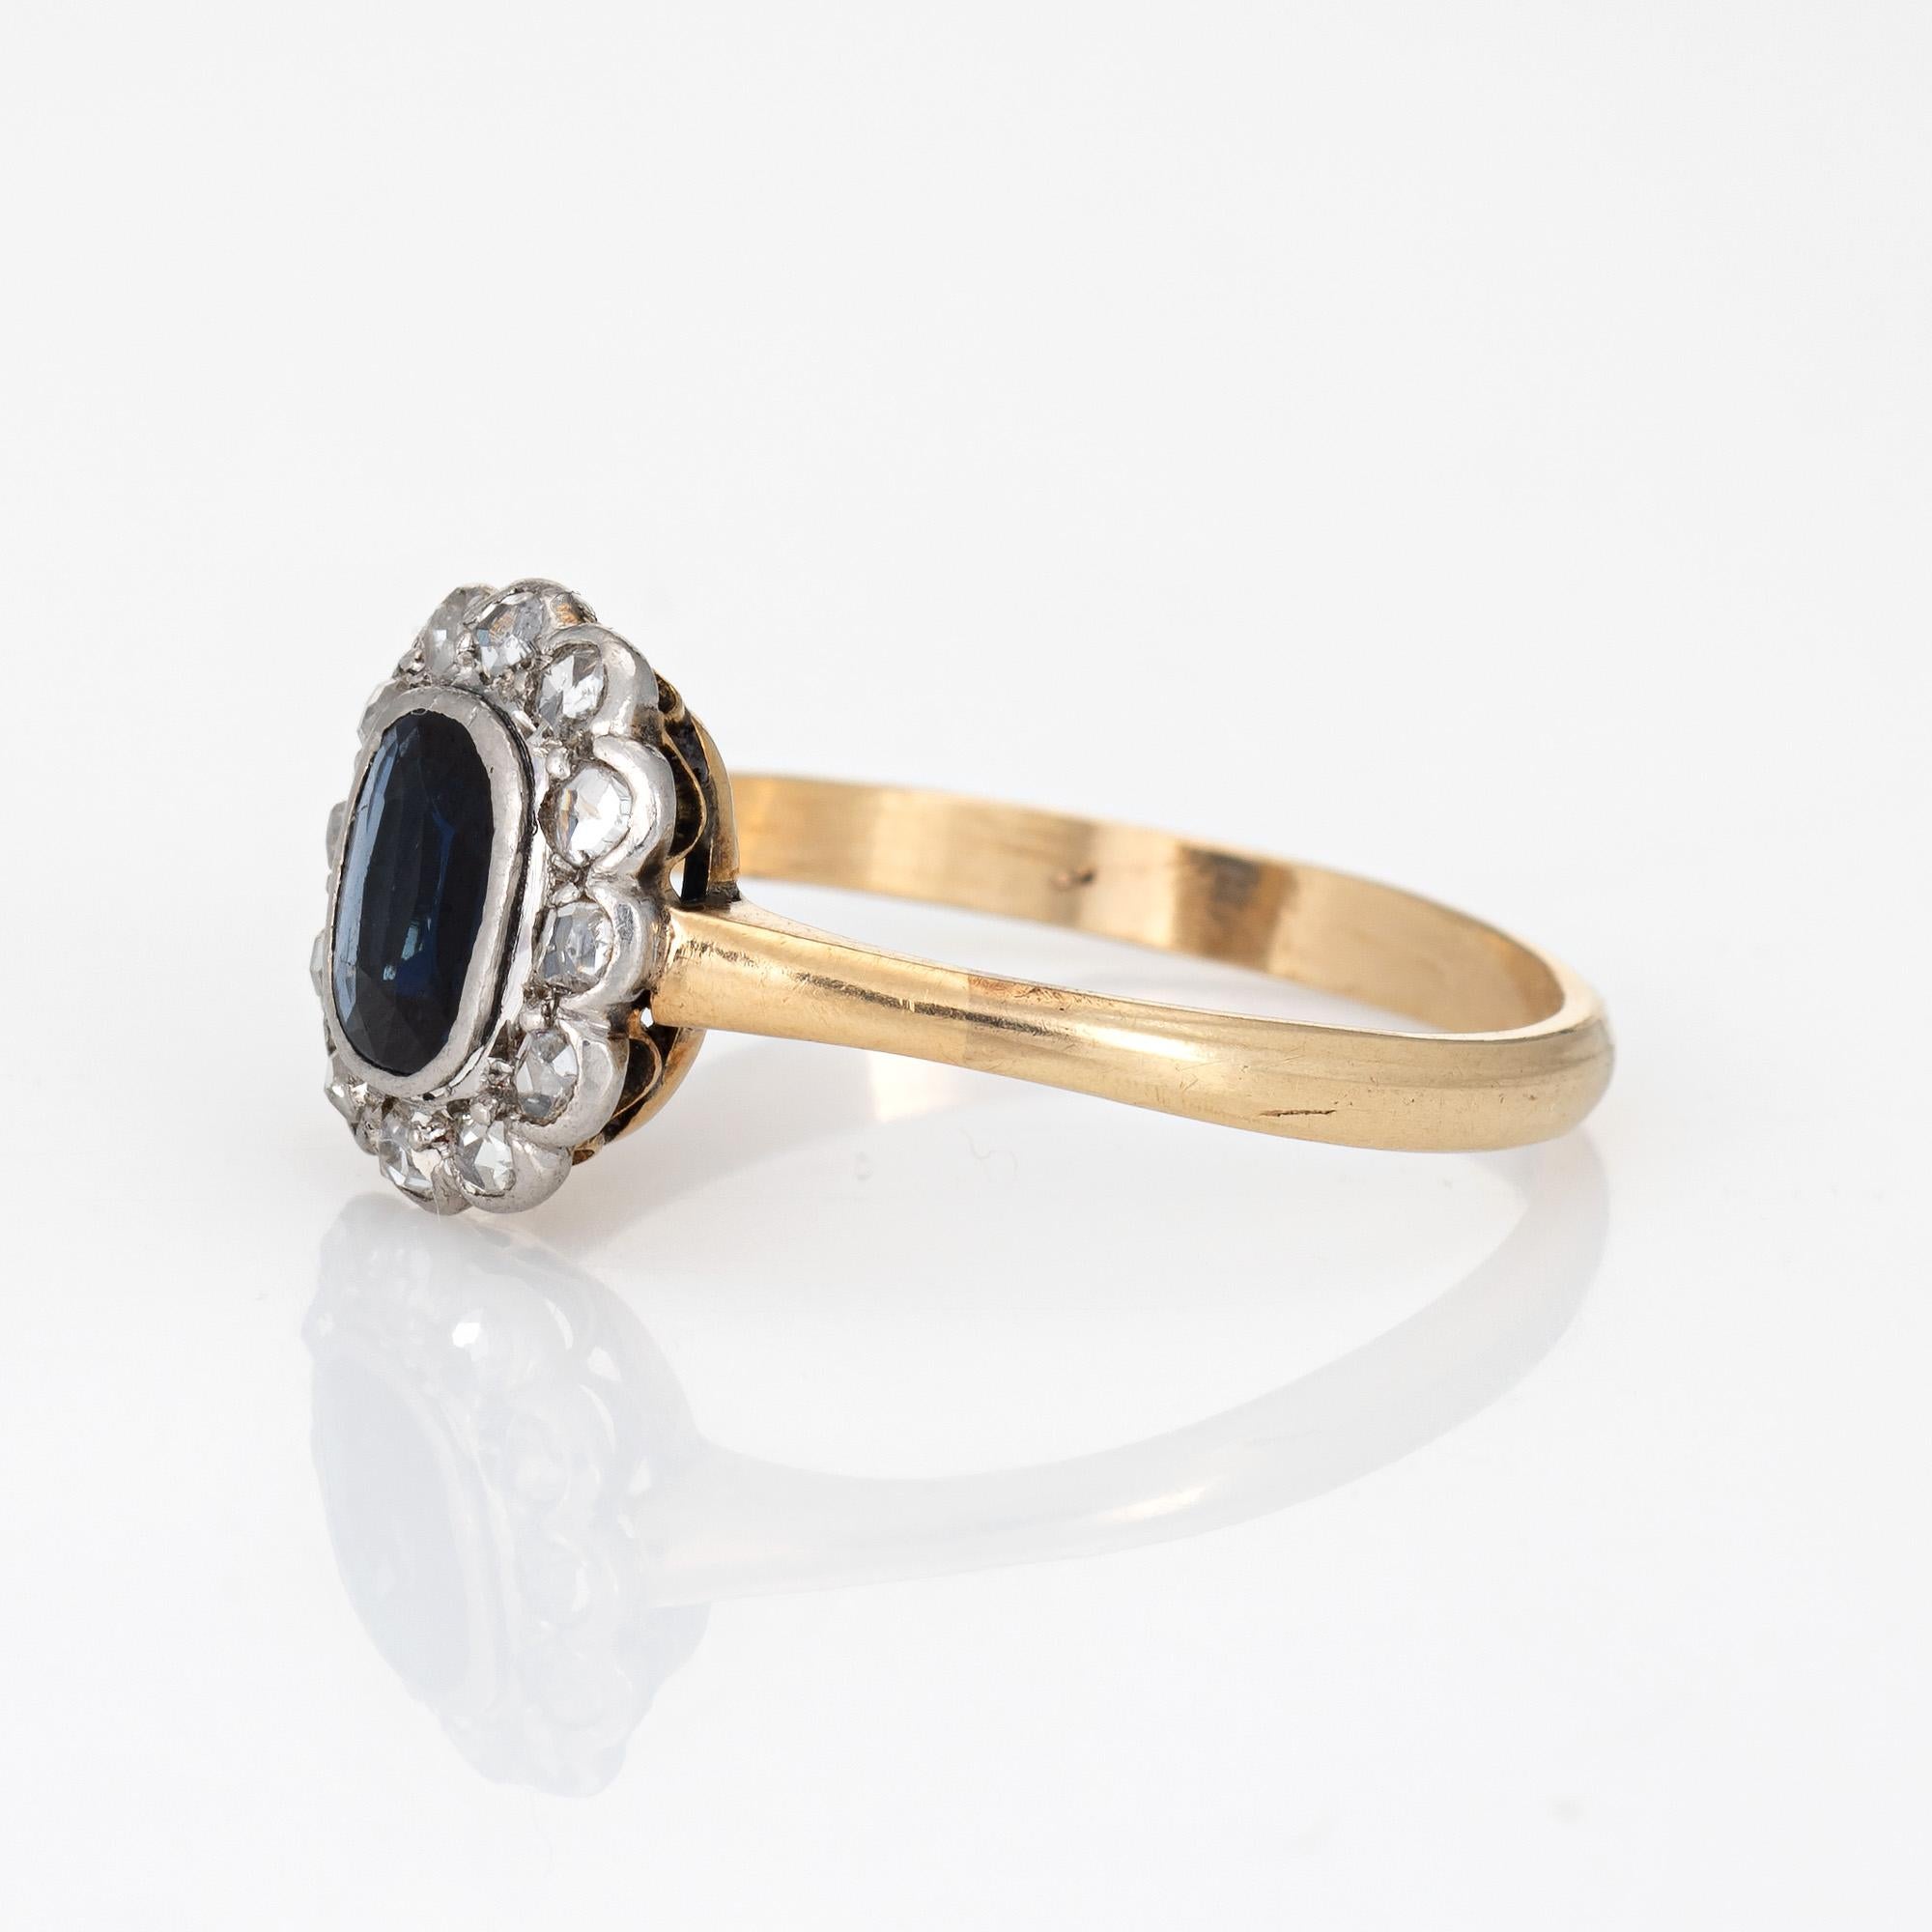 Cushion Cut Antique Victorian Gemstone Engagement Ring Natural Sapphire Diamond Princess